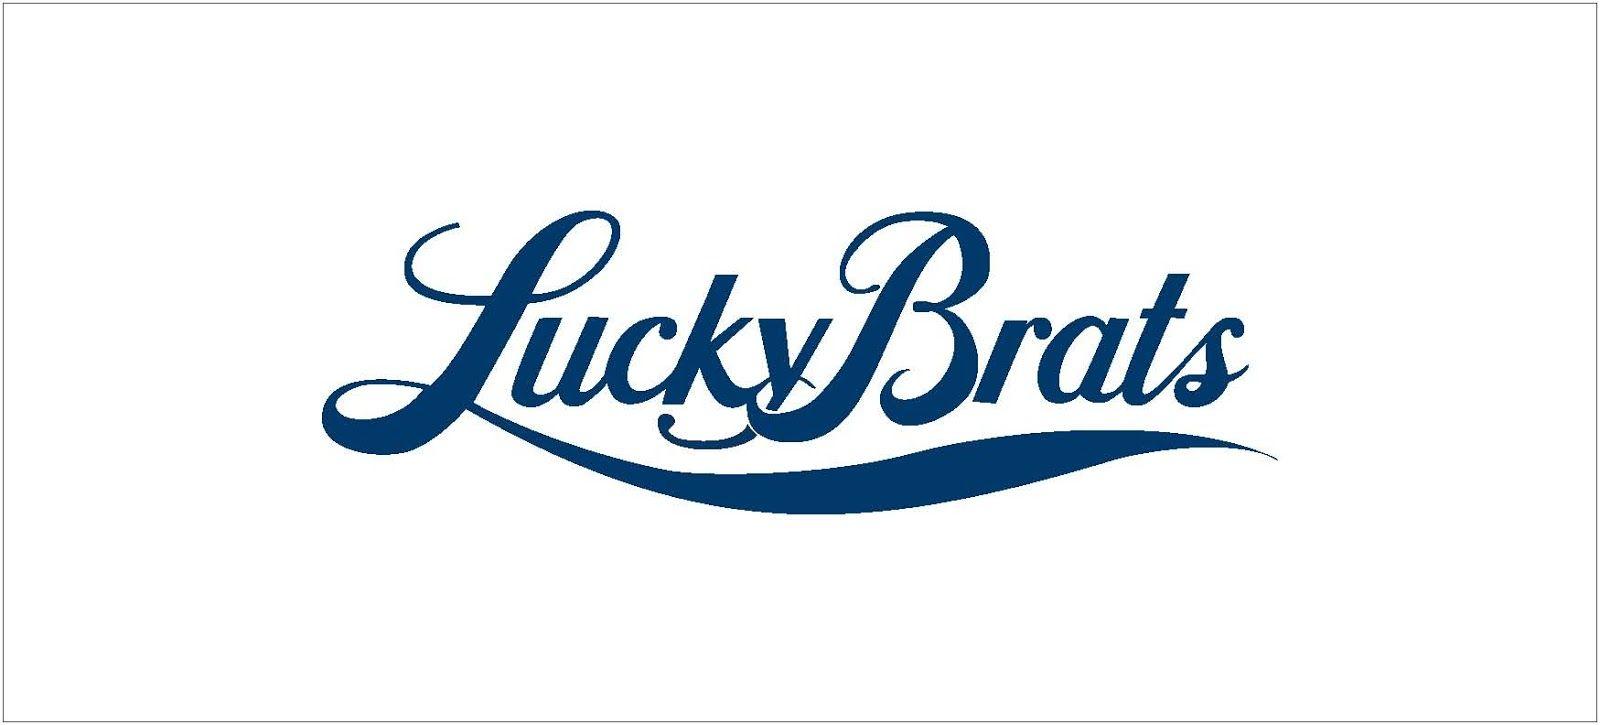 Brat Logo - lucky brat LOGO